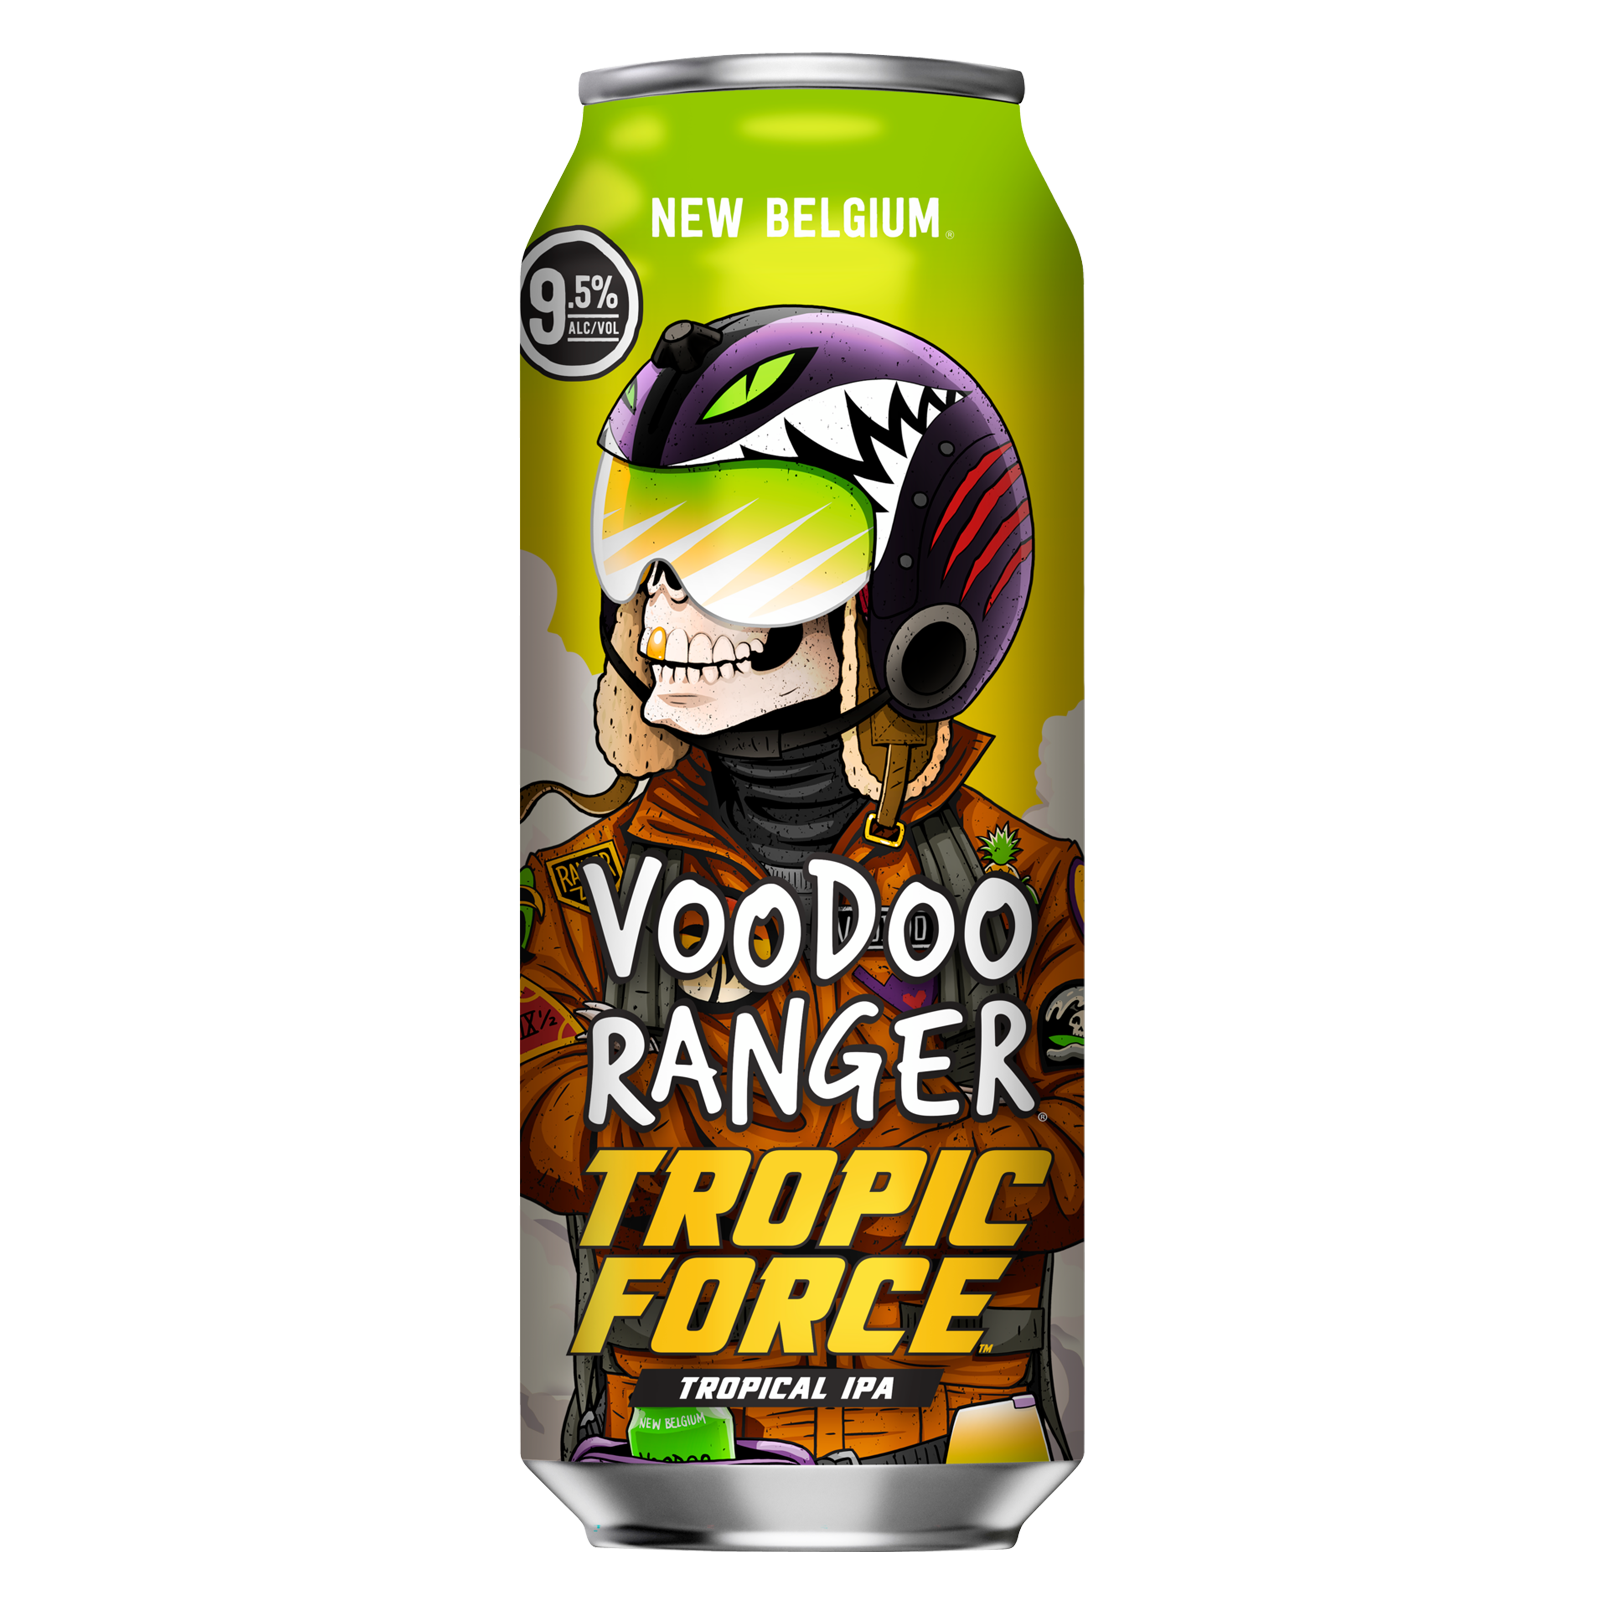 New Belgium Voodoo Ranger Tropic Force IPA 19.2oz Can 9.5% ABV